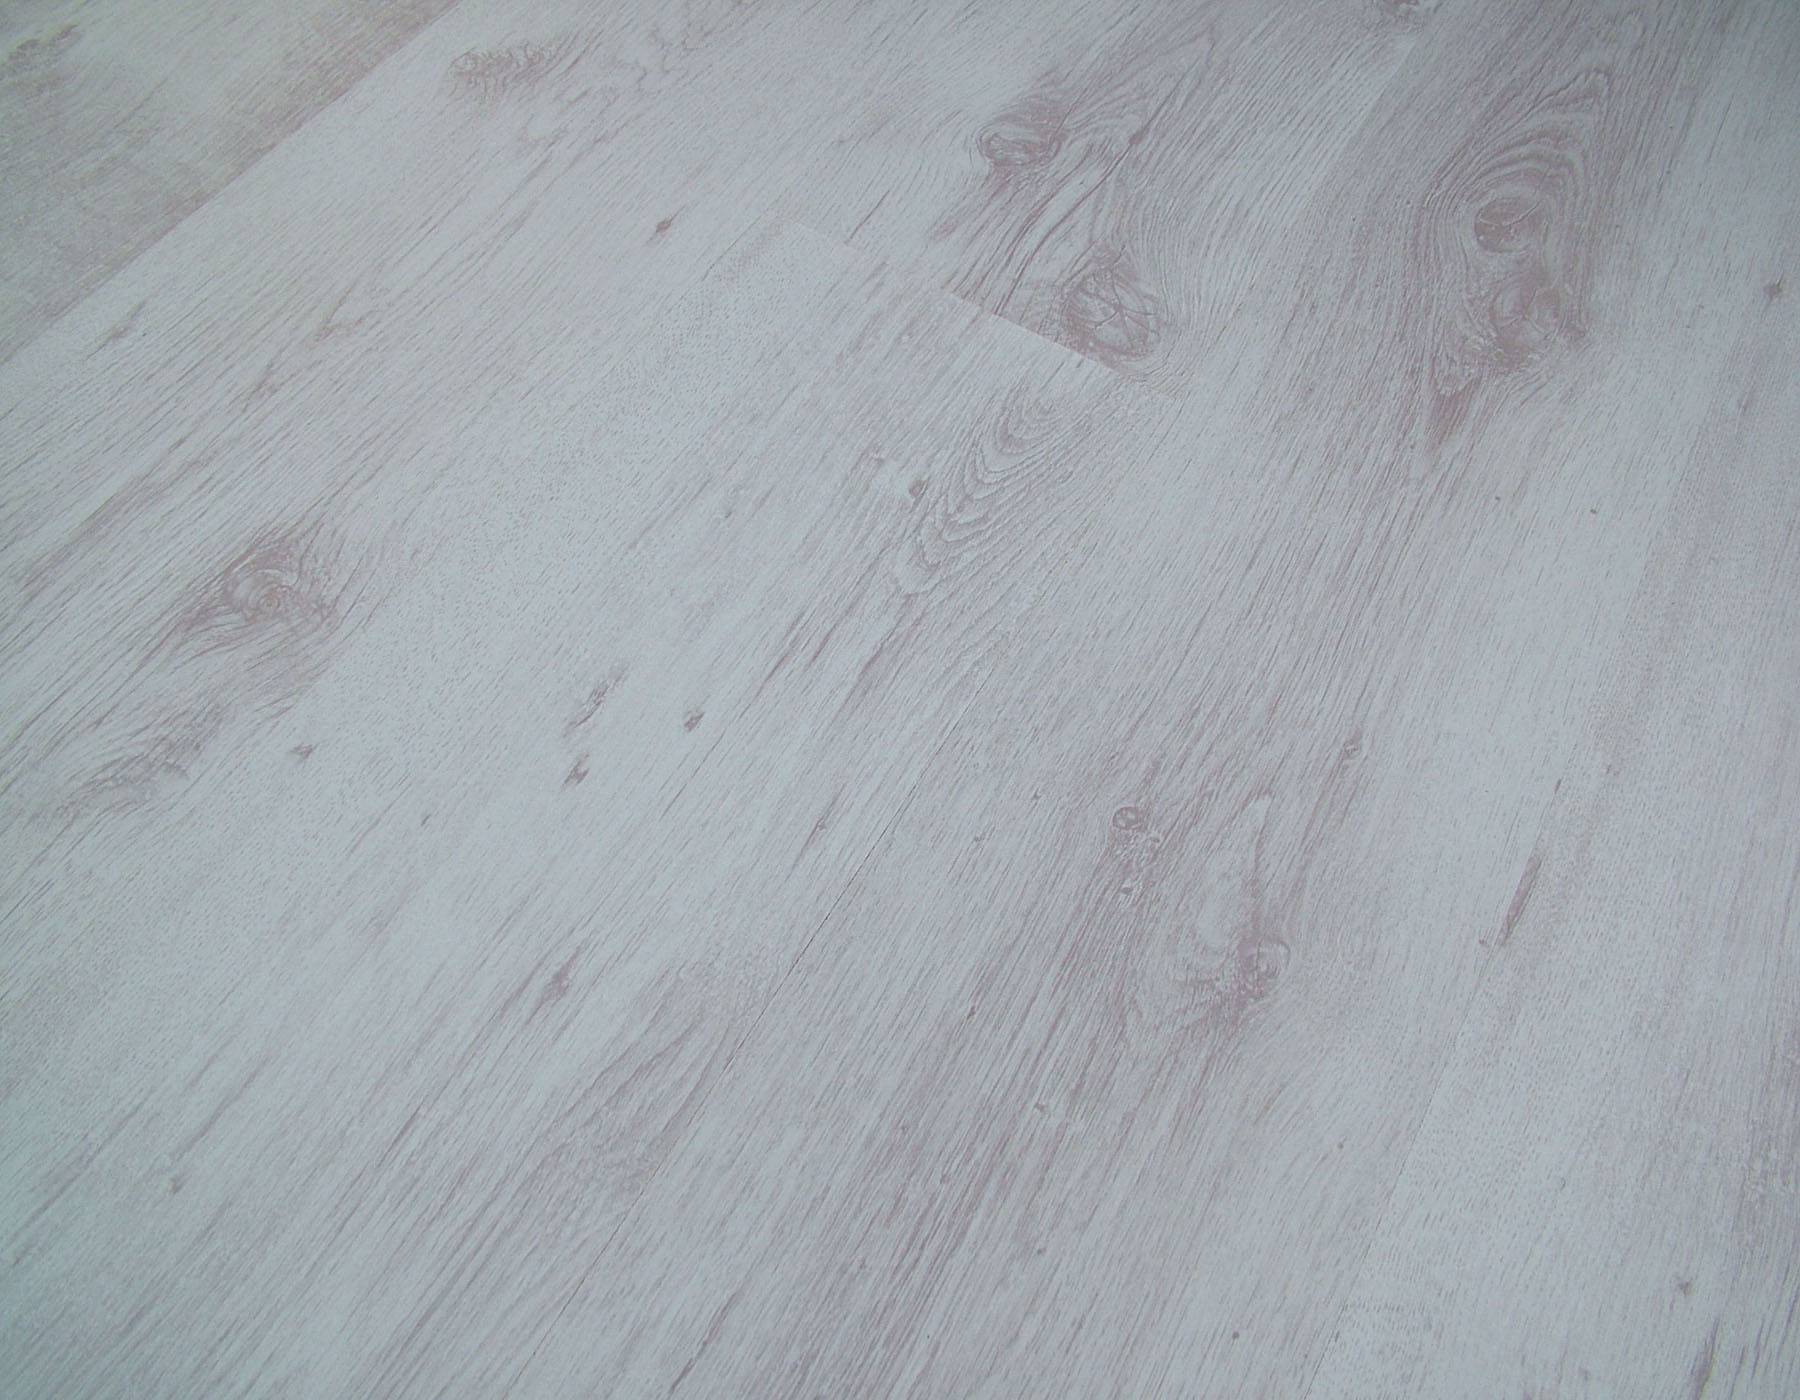 Krontex Rustic oak White laminate flooring